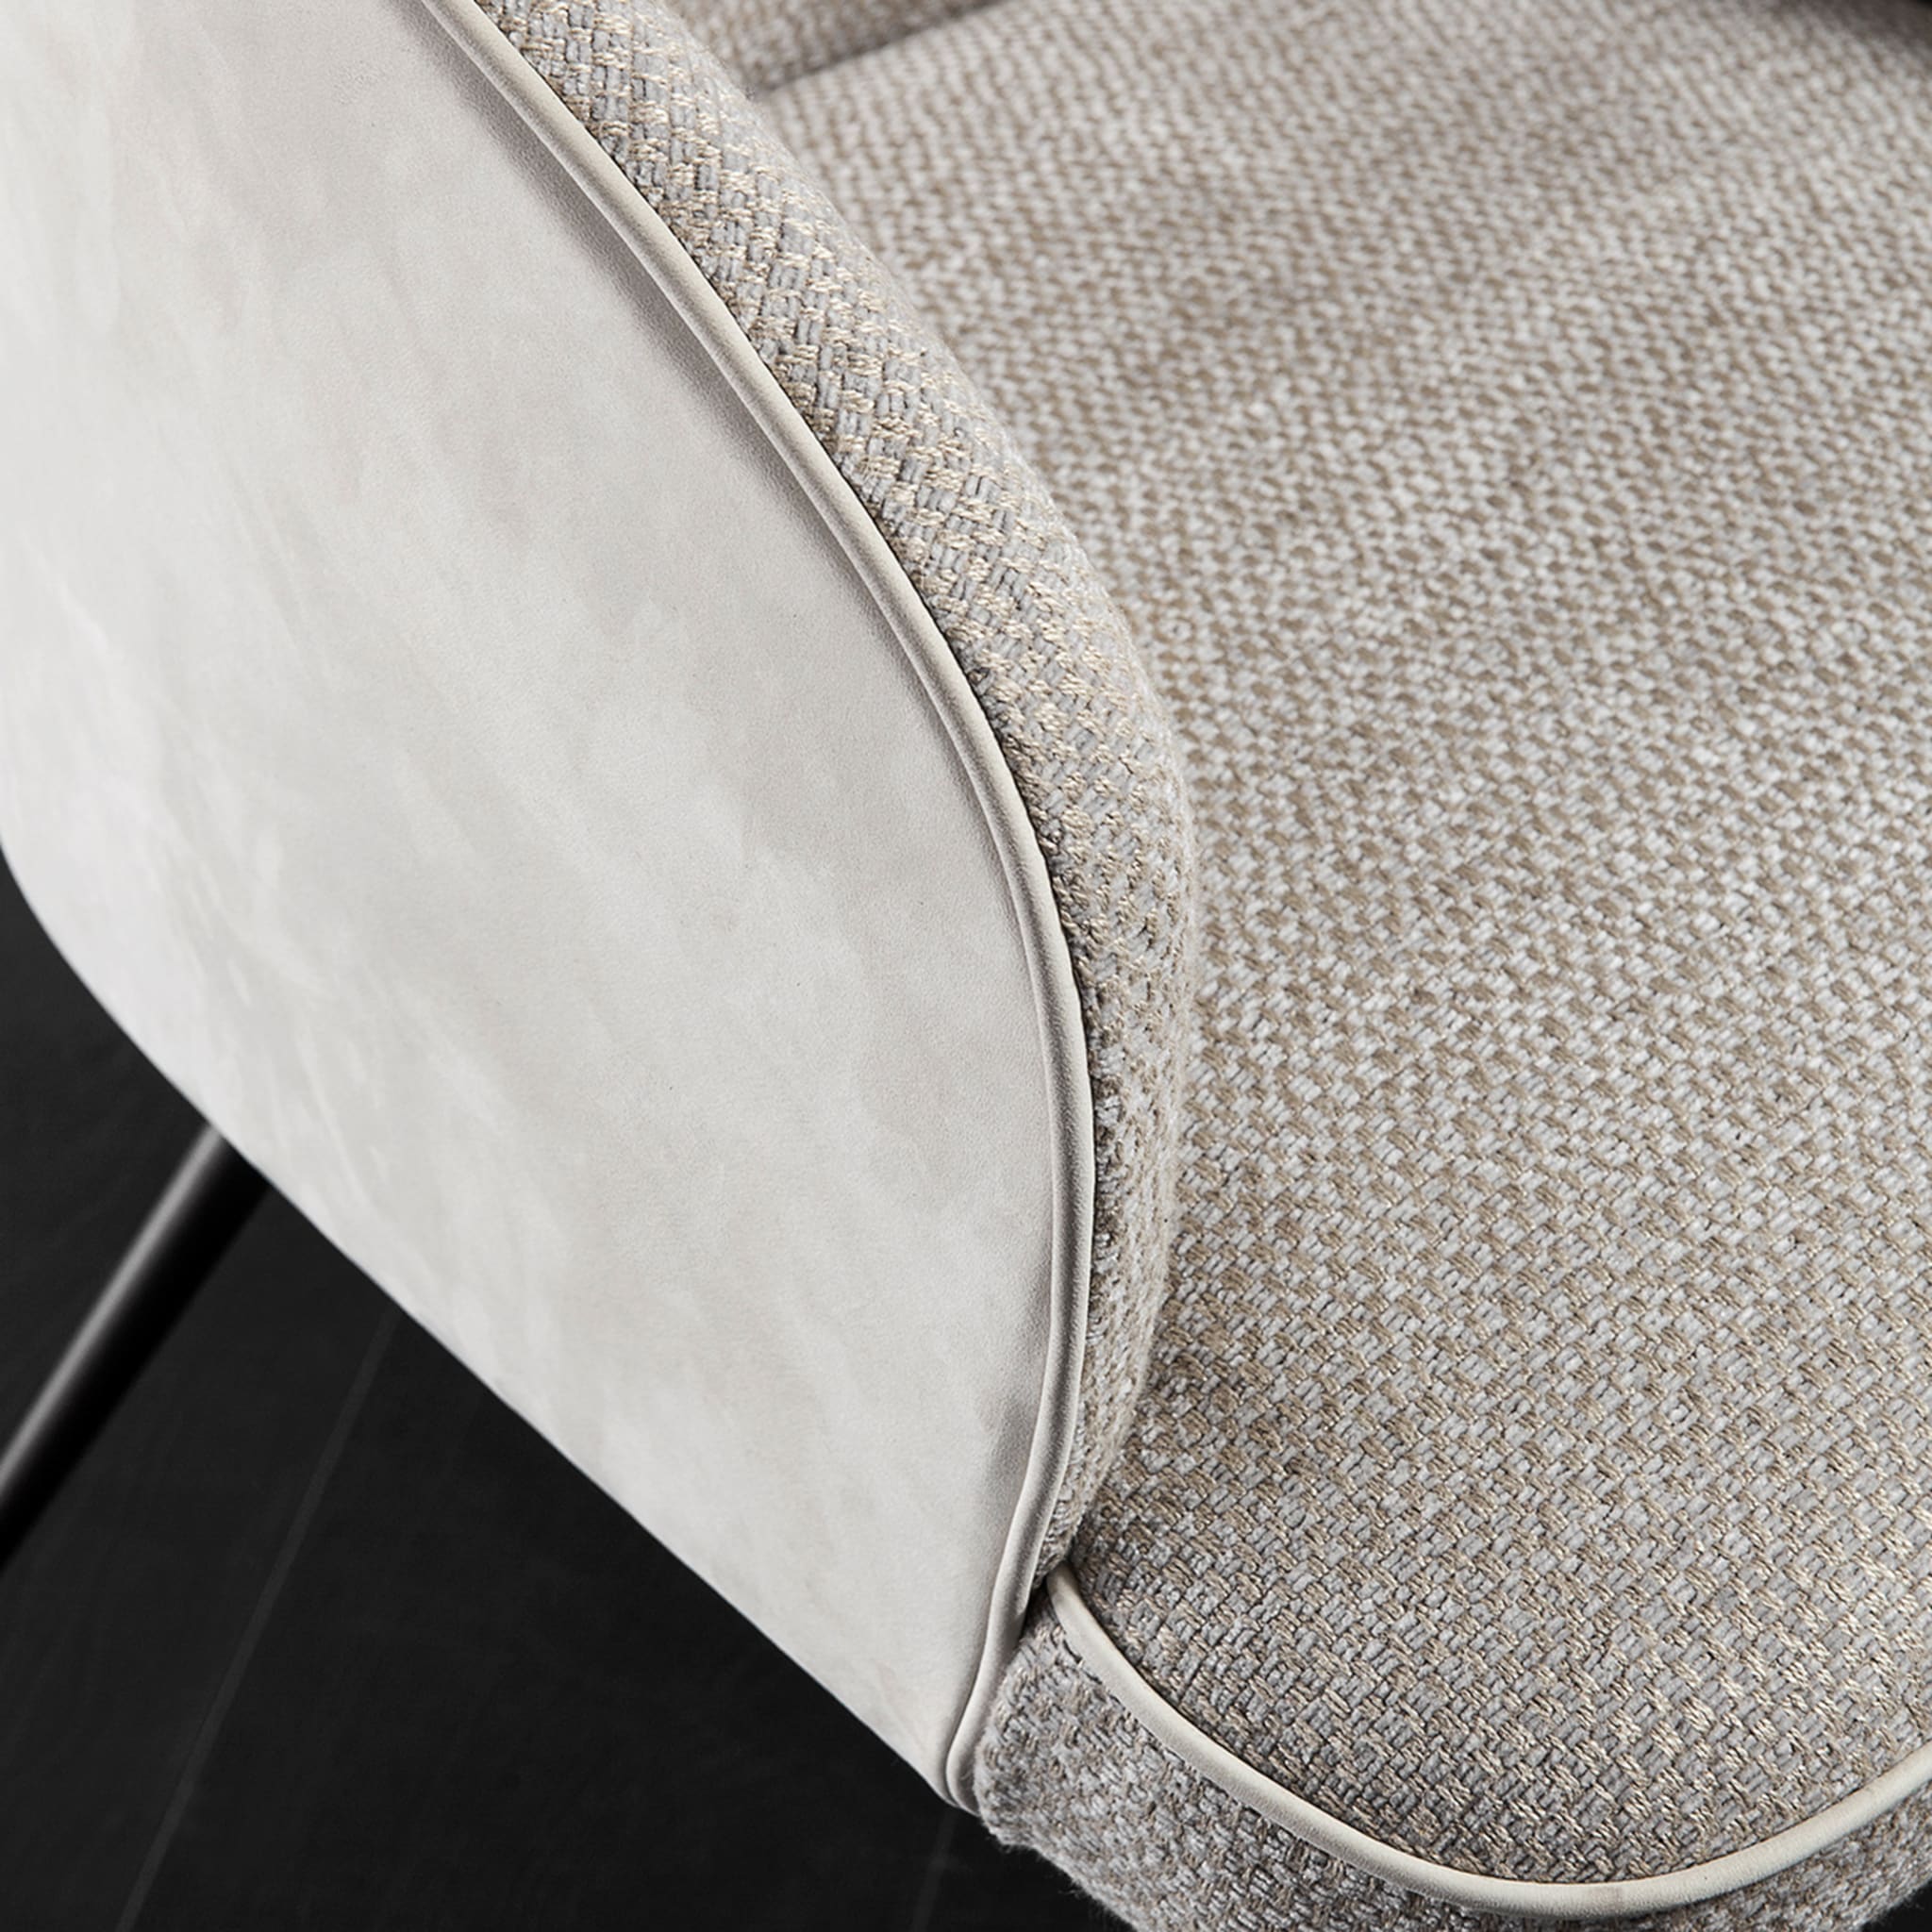 Like 1400 Gray Chair by Gianluigi Landoni - Alternative view 2